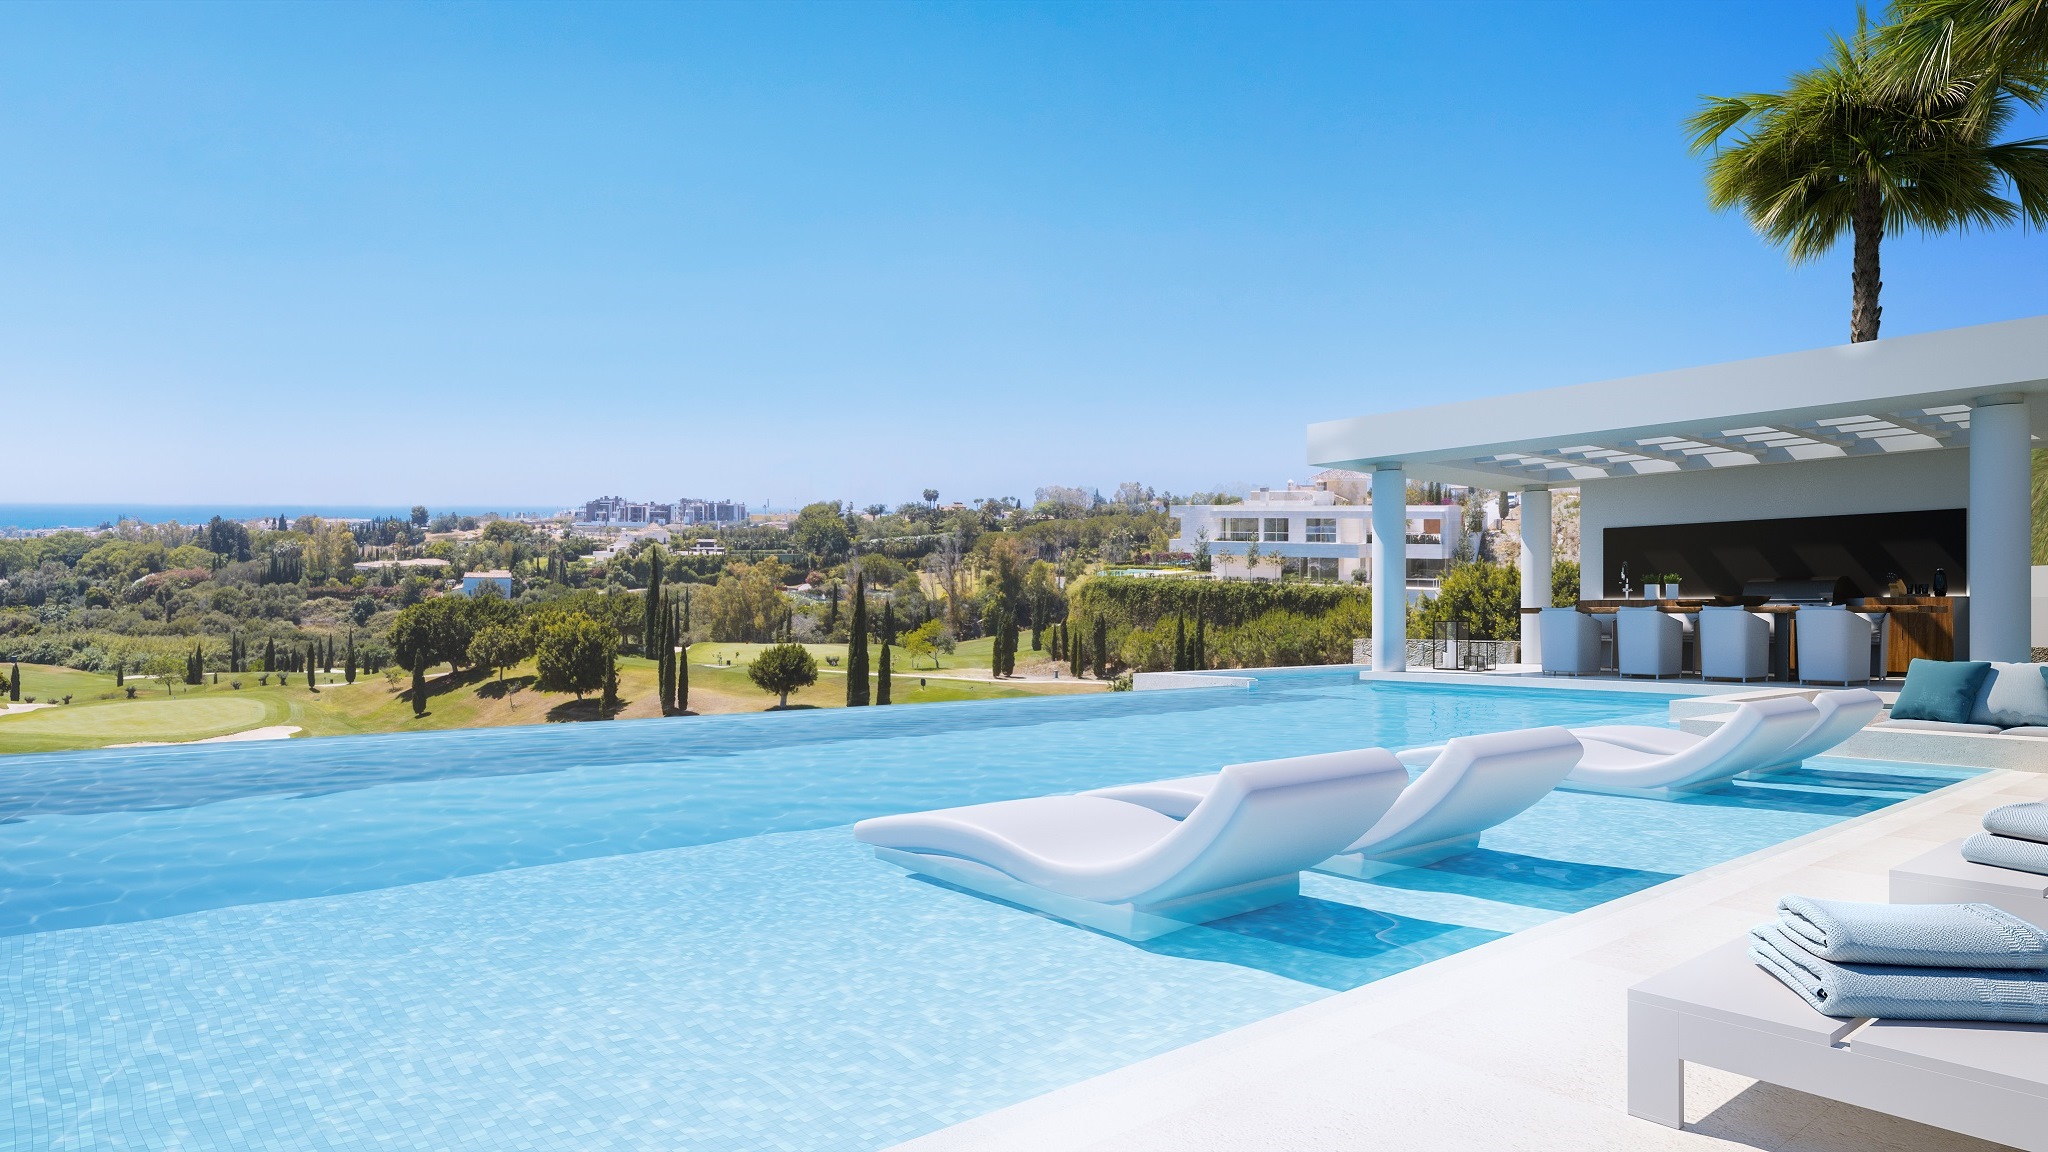 Bemont luxury villa project for sale in Benahavis and Marbella, Costa del Sol, Andalusia, Spain